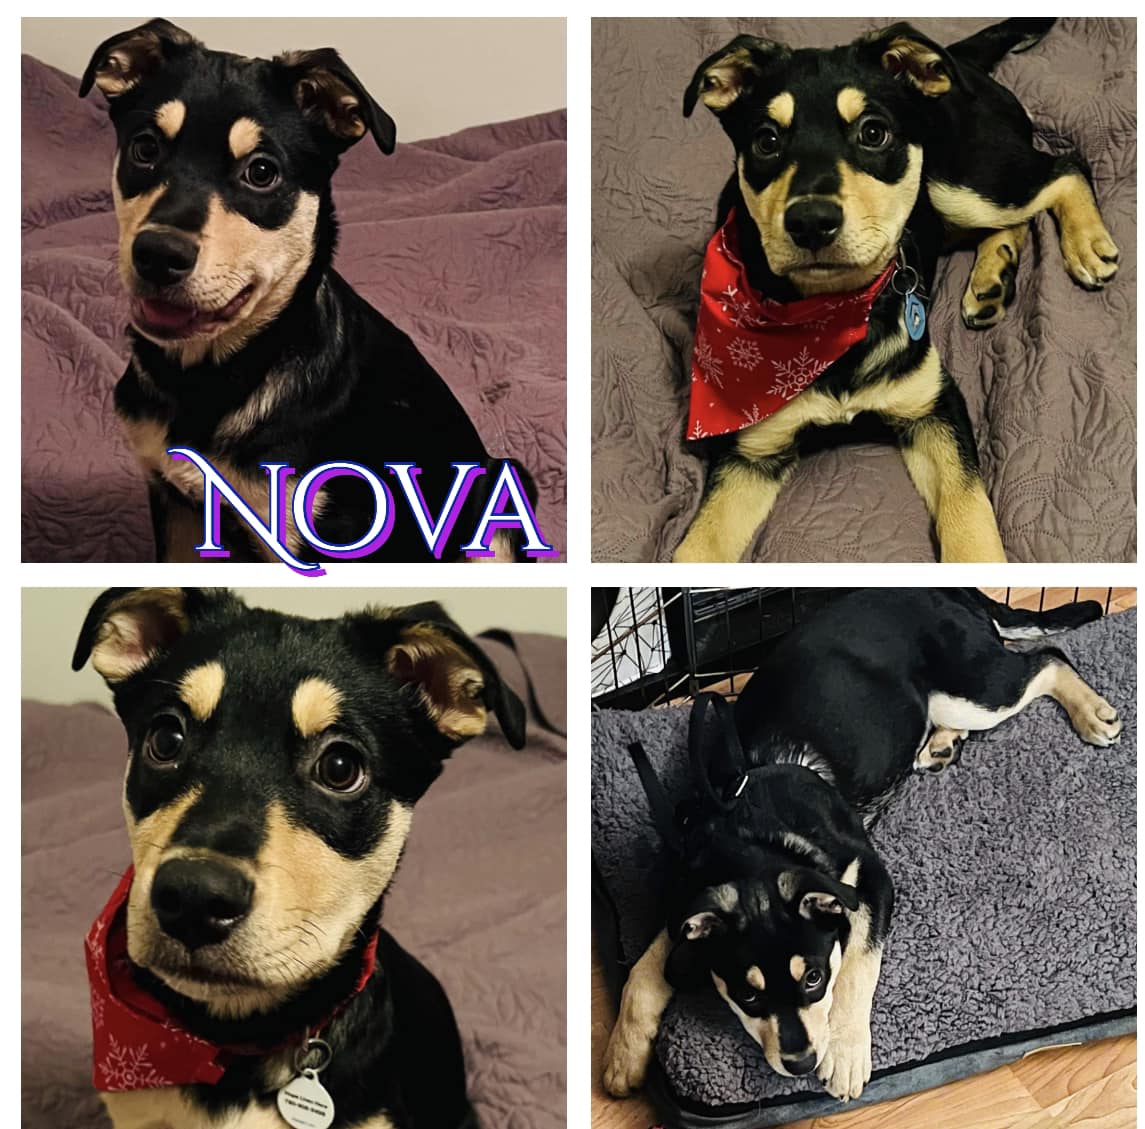 Nova- Blacka nd Brown colored puppy for adoption. Adult dog companion.